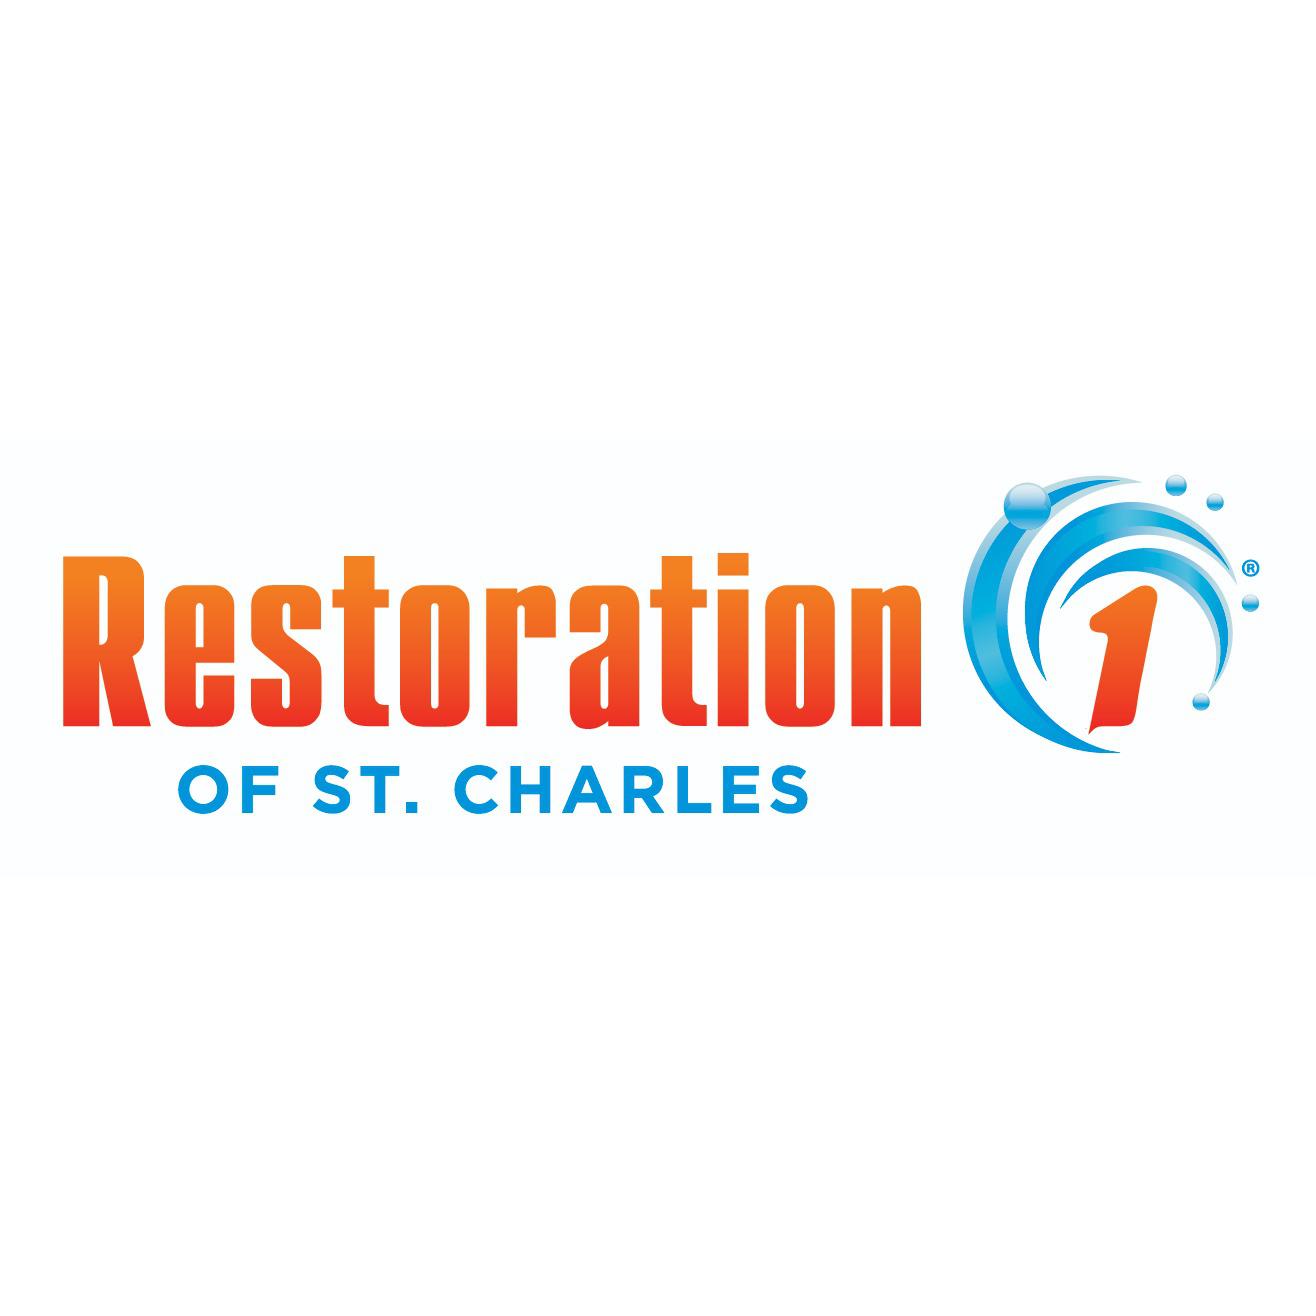 Restoration 1 of St. Charles